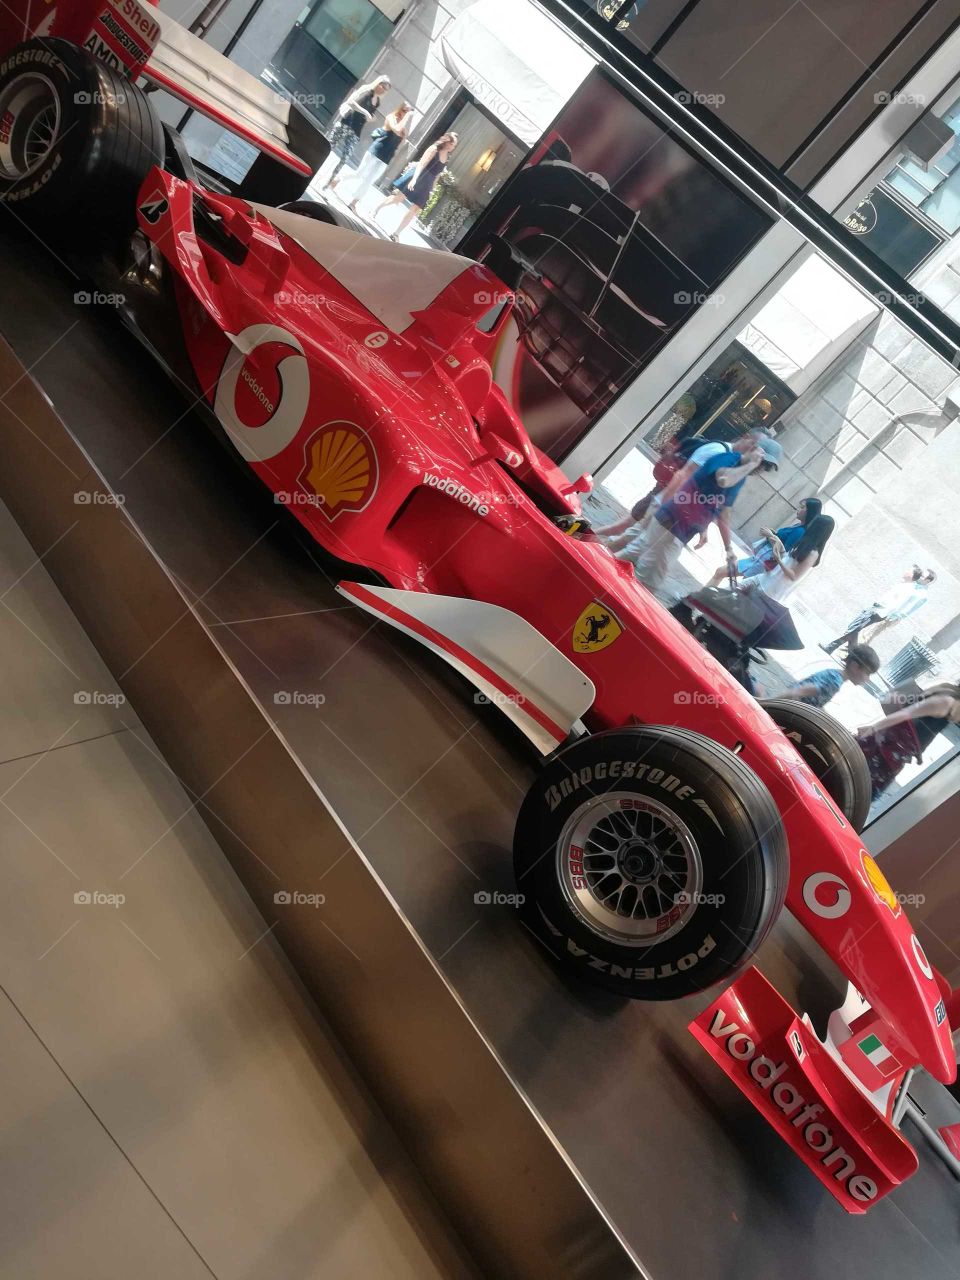 Ferrari store in Milan